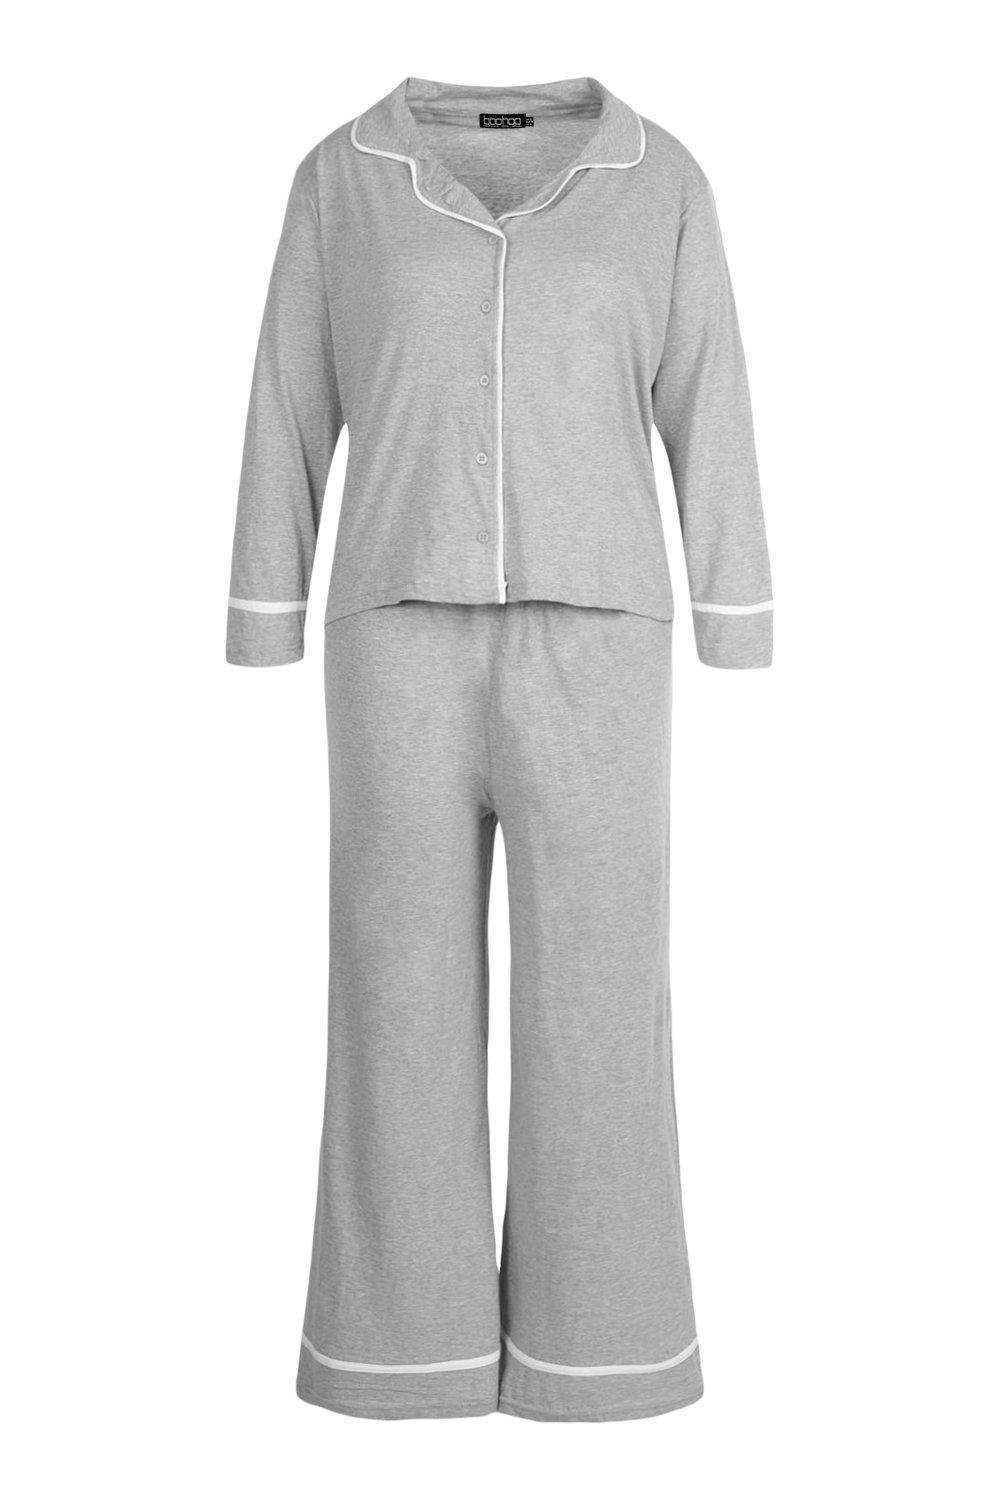 Maternity Star Print Pants Pajama Set